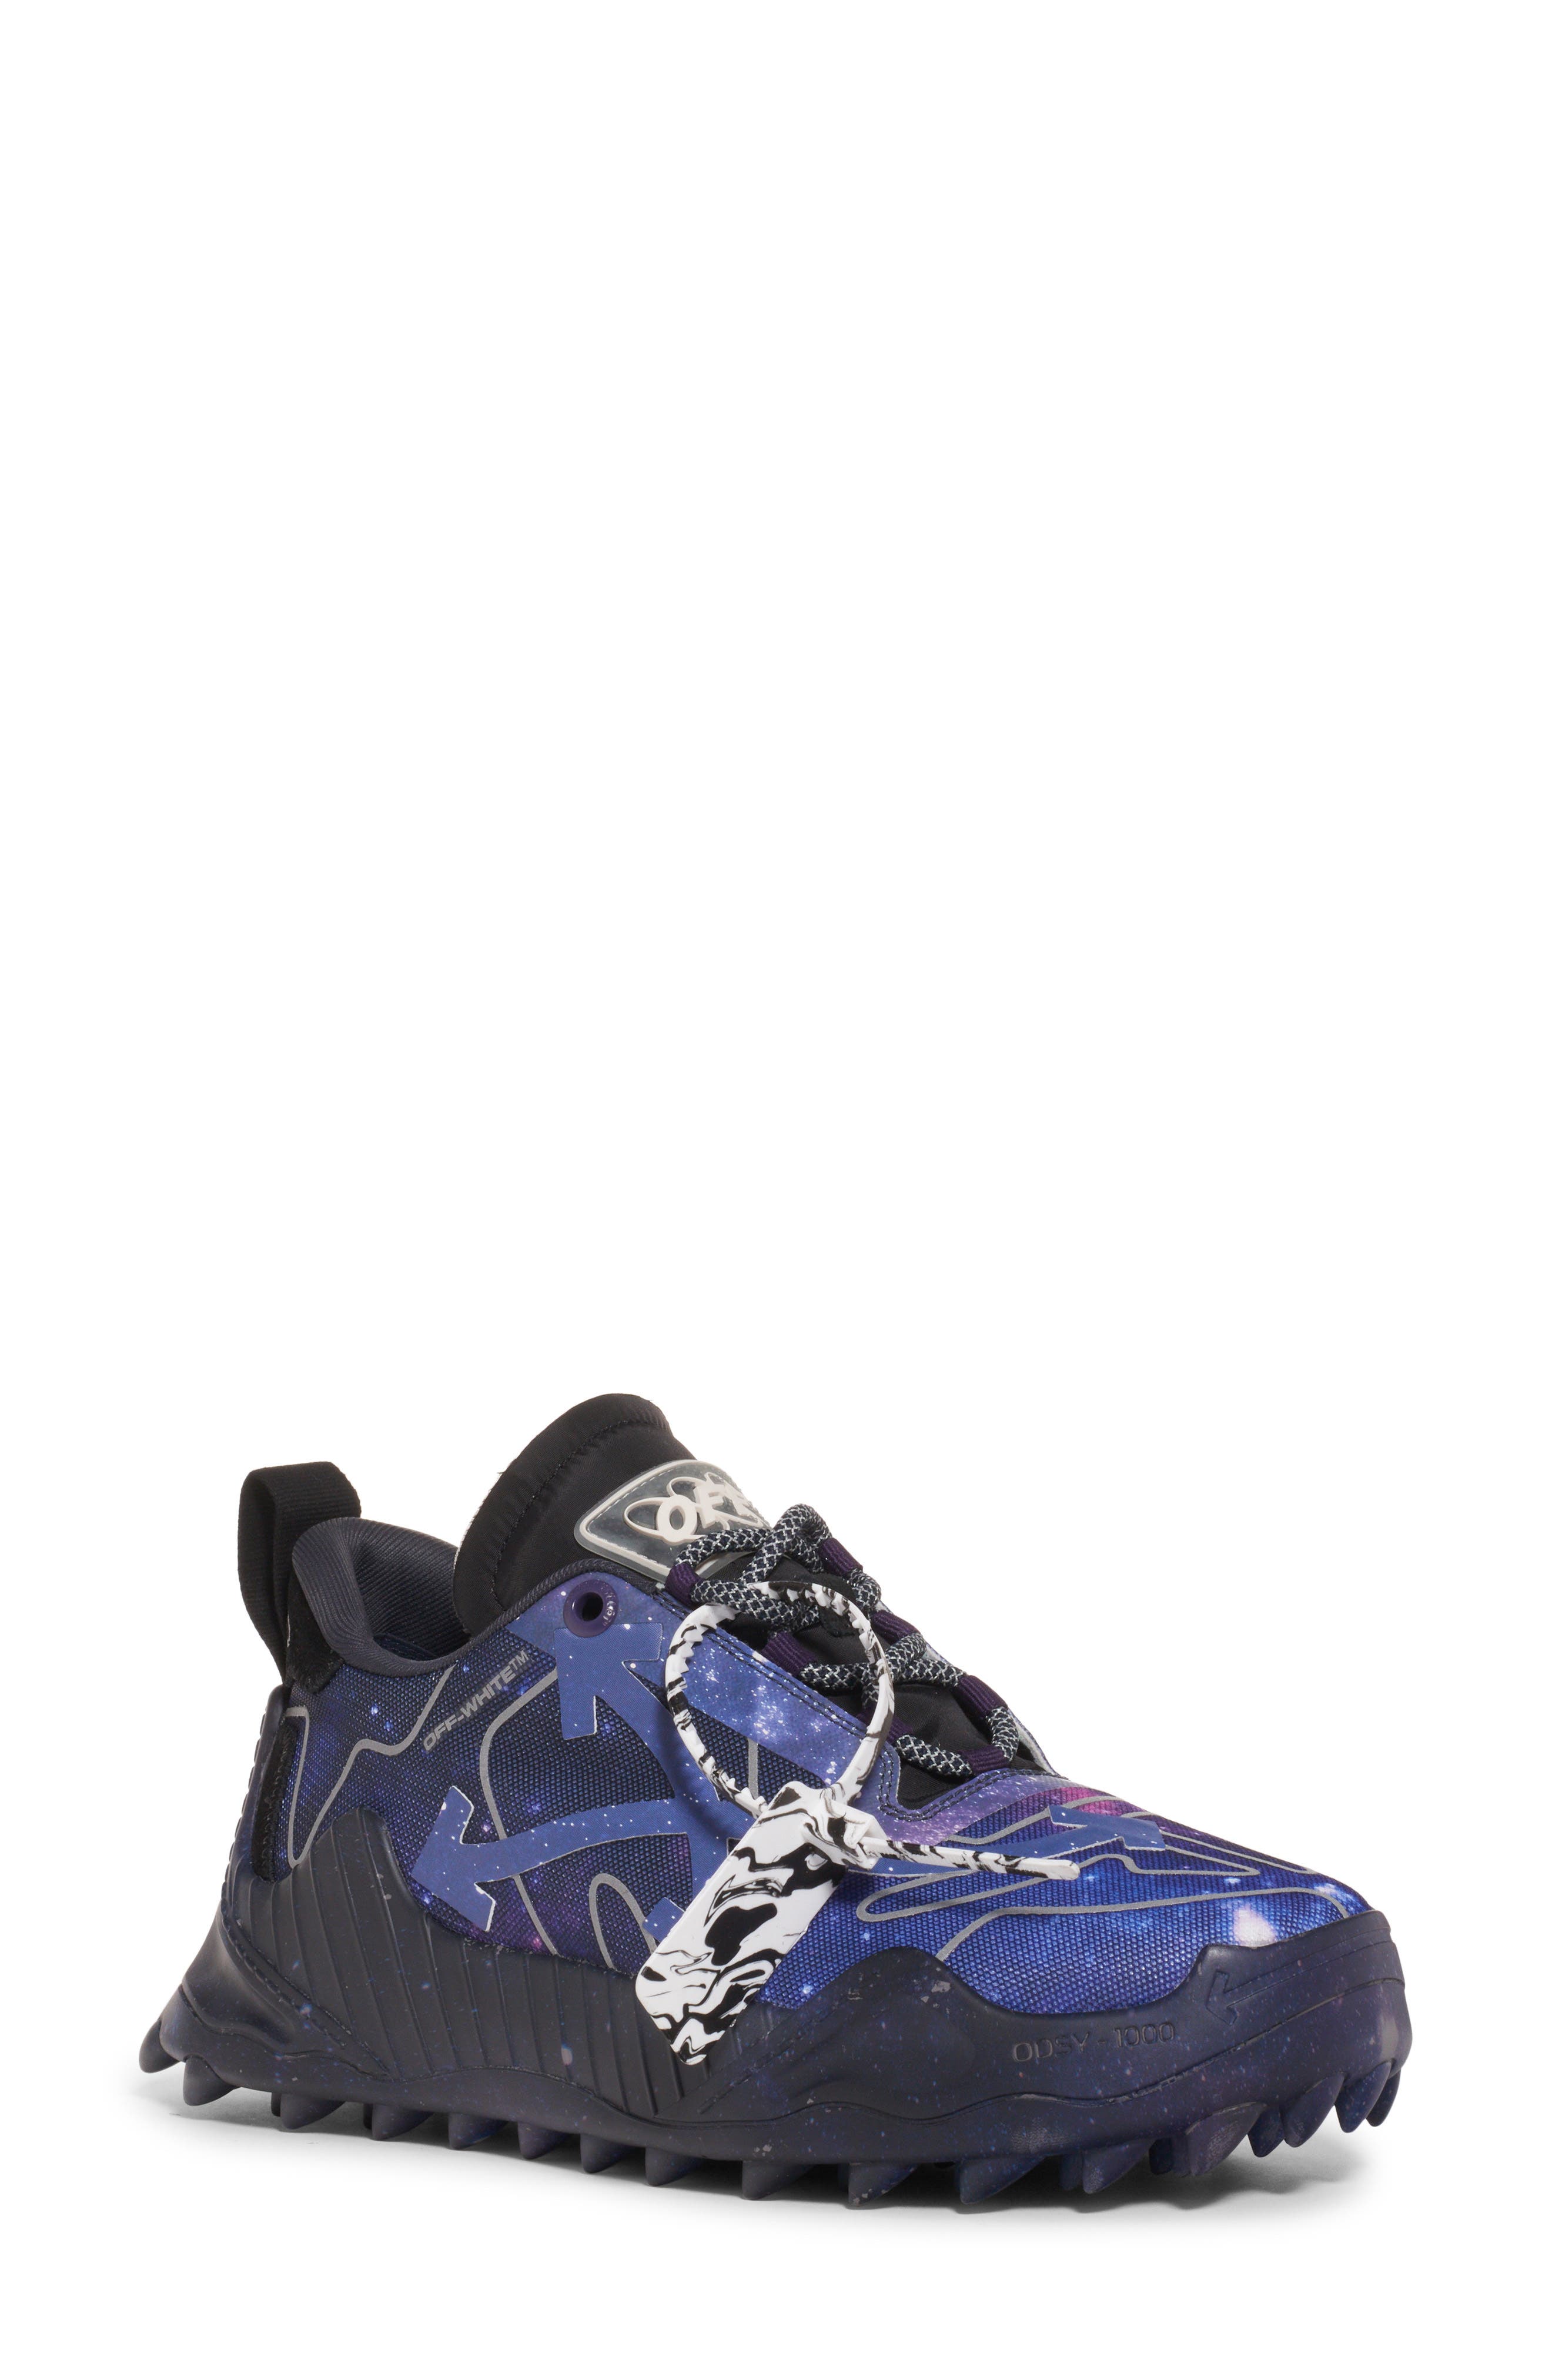 black and purple sneakers